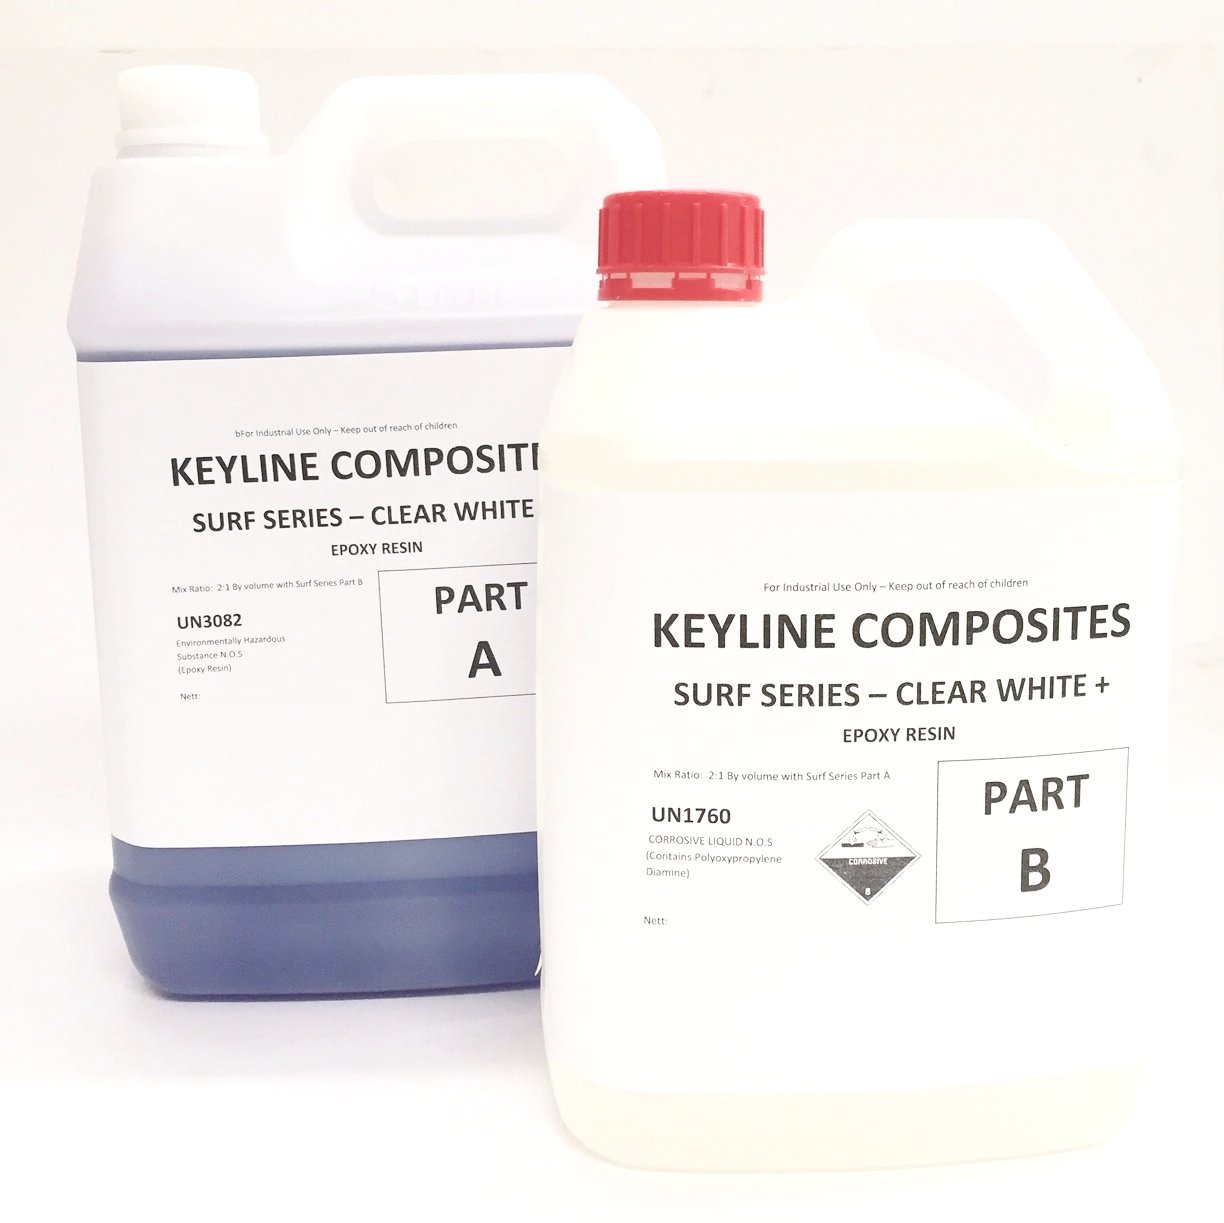 Keyline Composites Surf Series Optic Bright Epoxy Resin 7.5L Kit